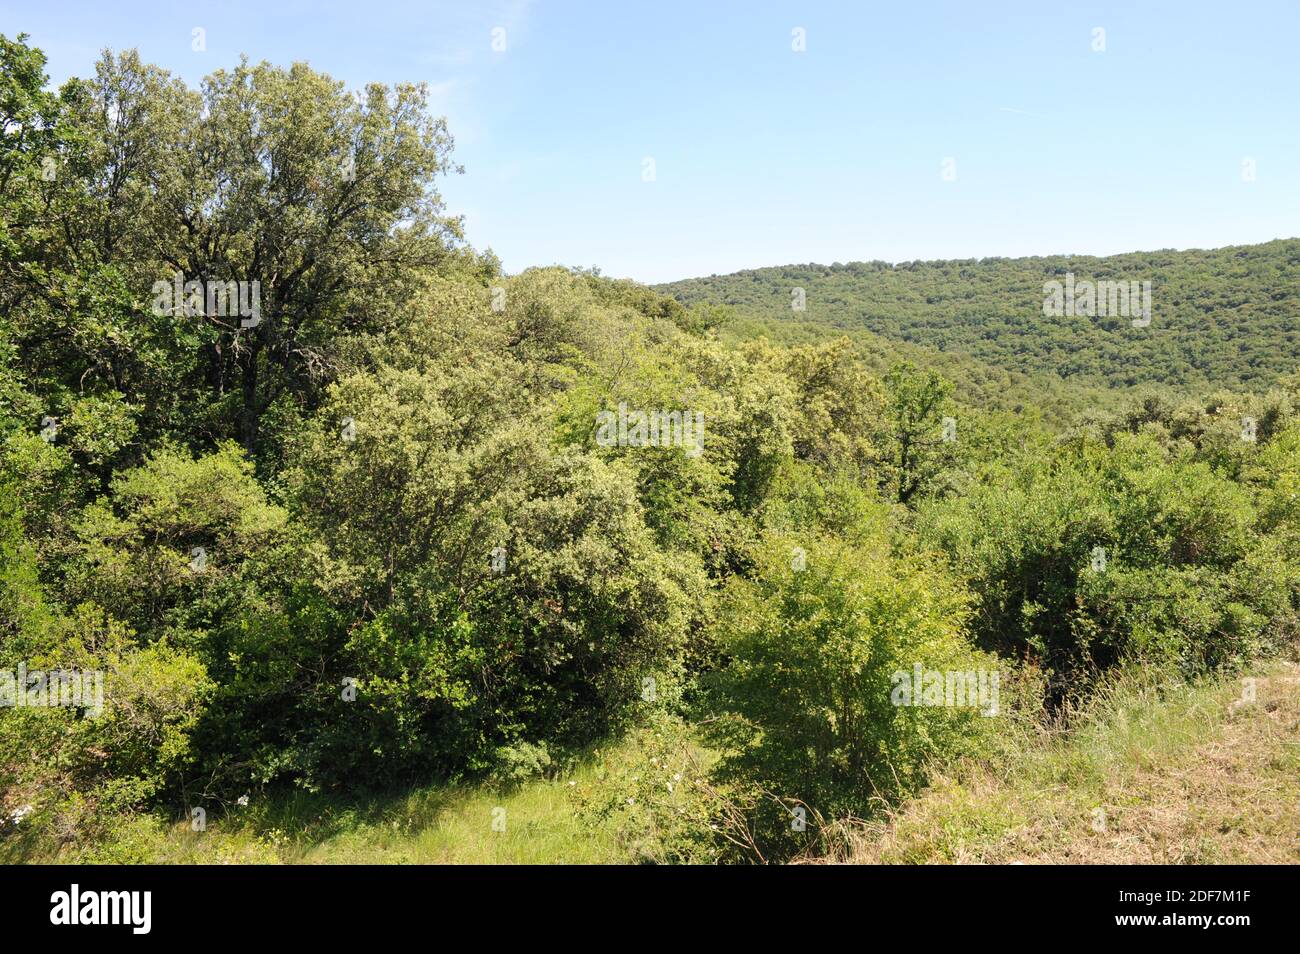 Alto de ISO, bosque de robles perennes (Quercus rotundifolia). Valle del Romanzado, Navarra, España. Foto de stock